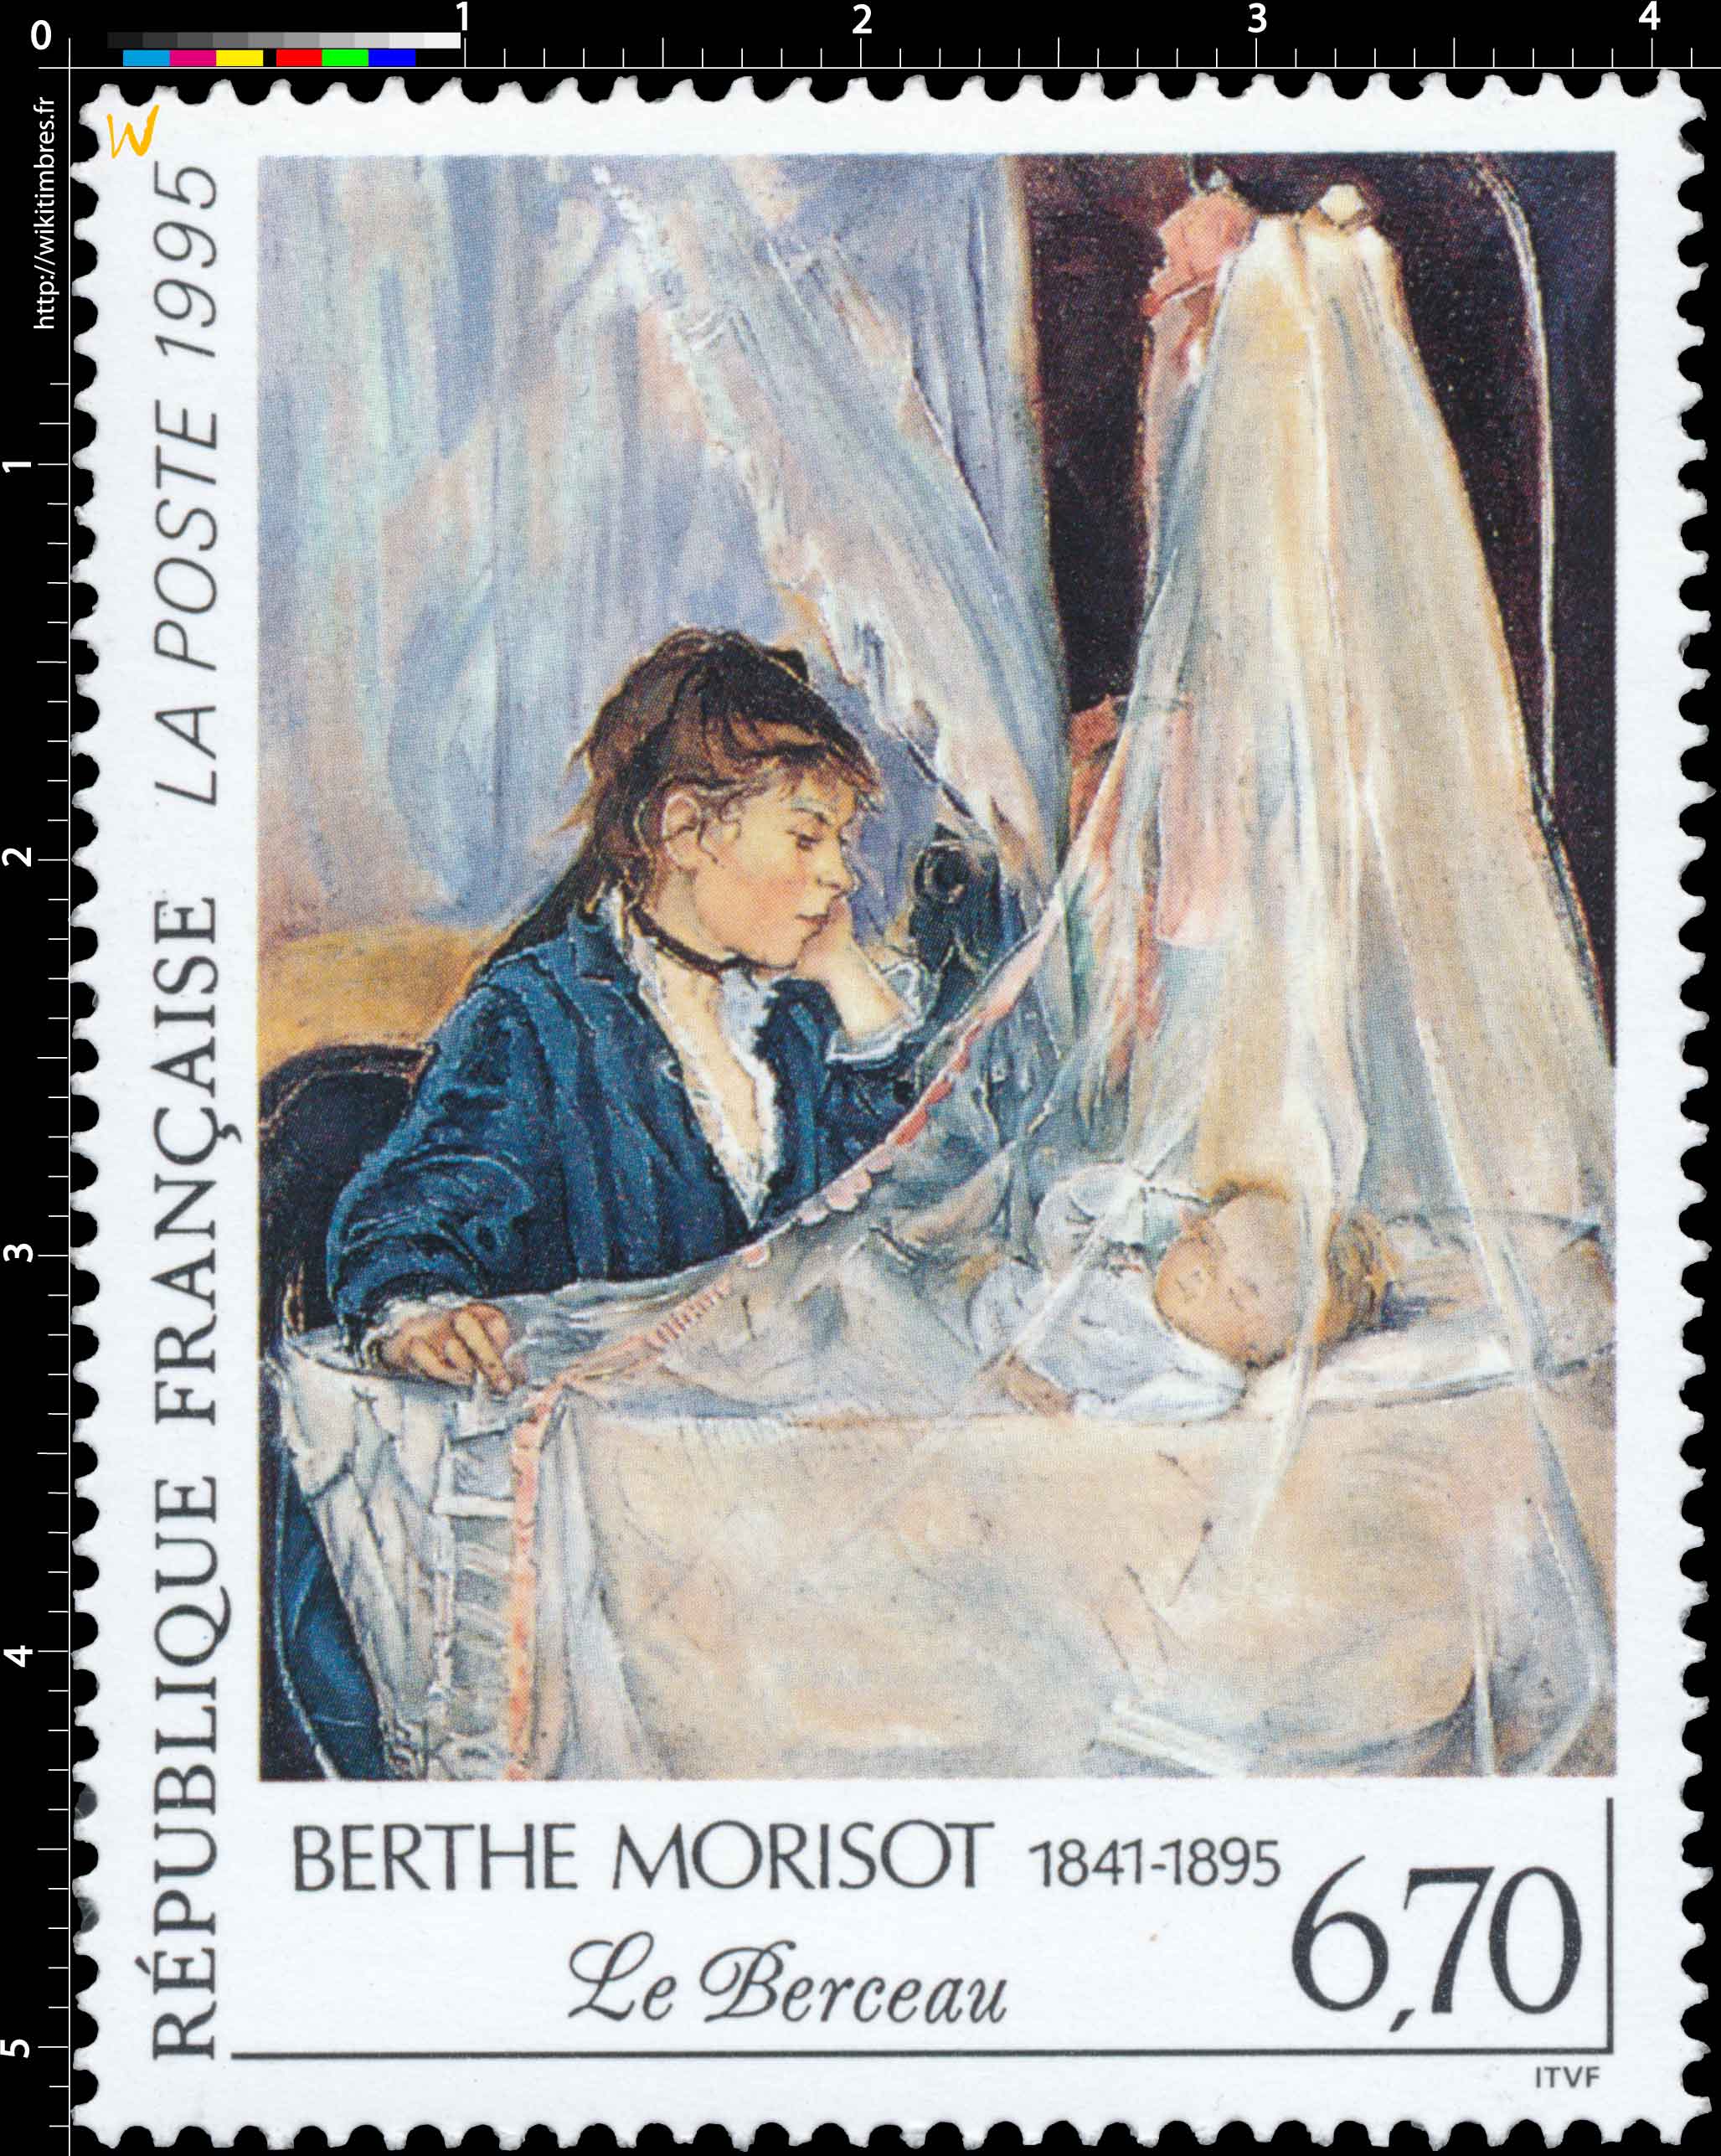 1995 BERTHE MORISOT 1841-1895 Le Berceau